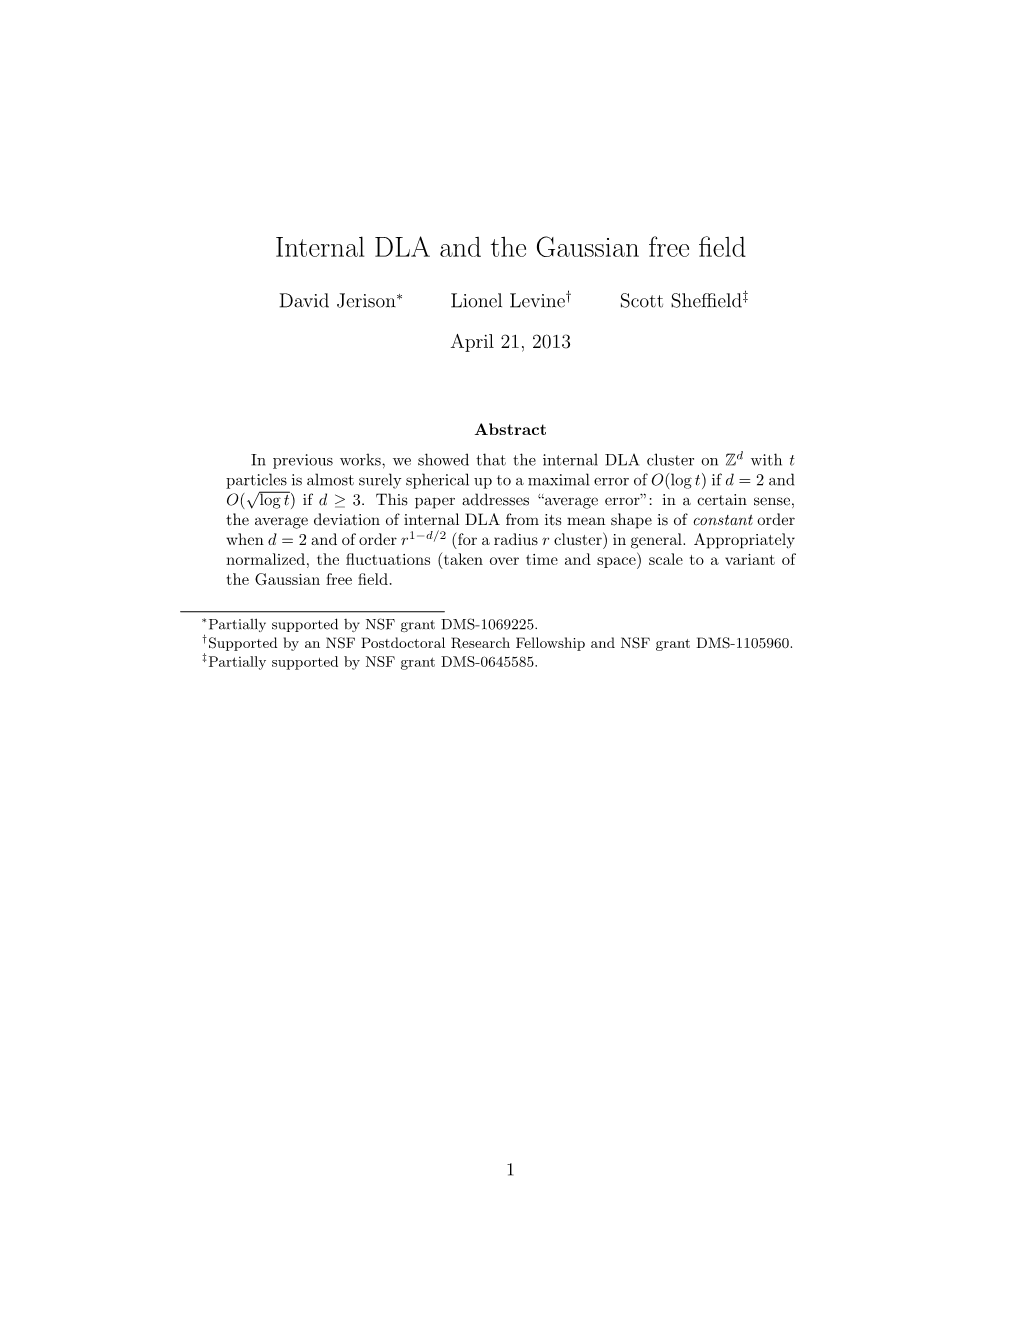 Internal DLA and the Gaussian Free Field